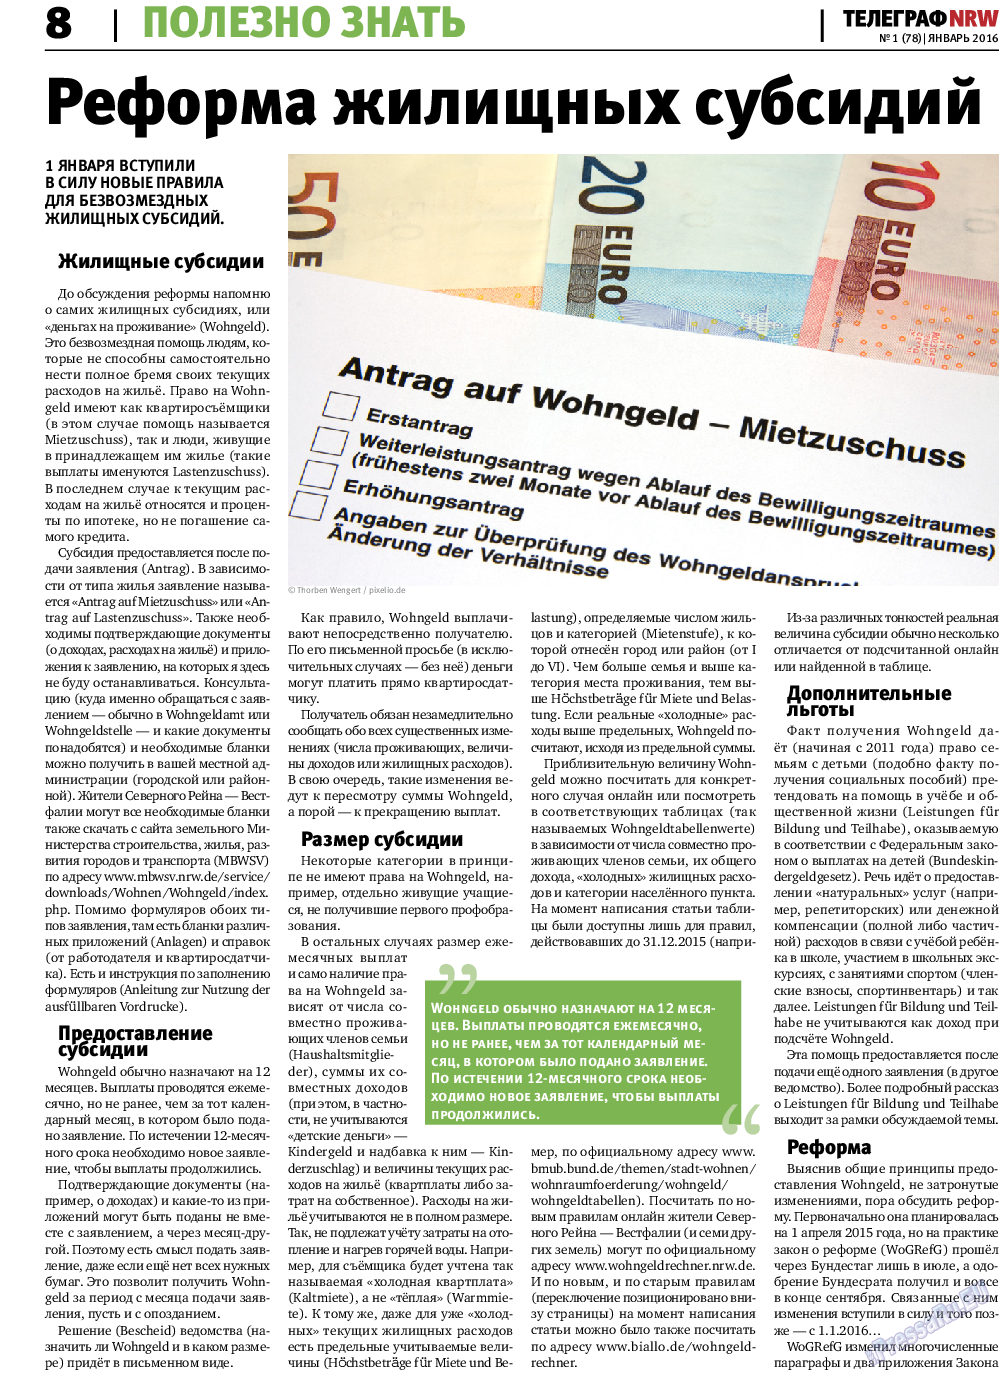 Телеграф NRW, газета. 2016 №1 стр.8